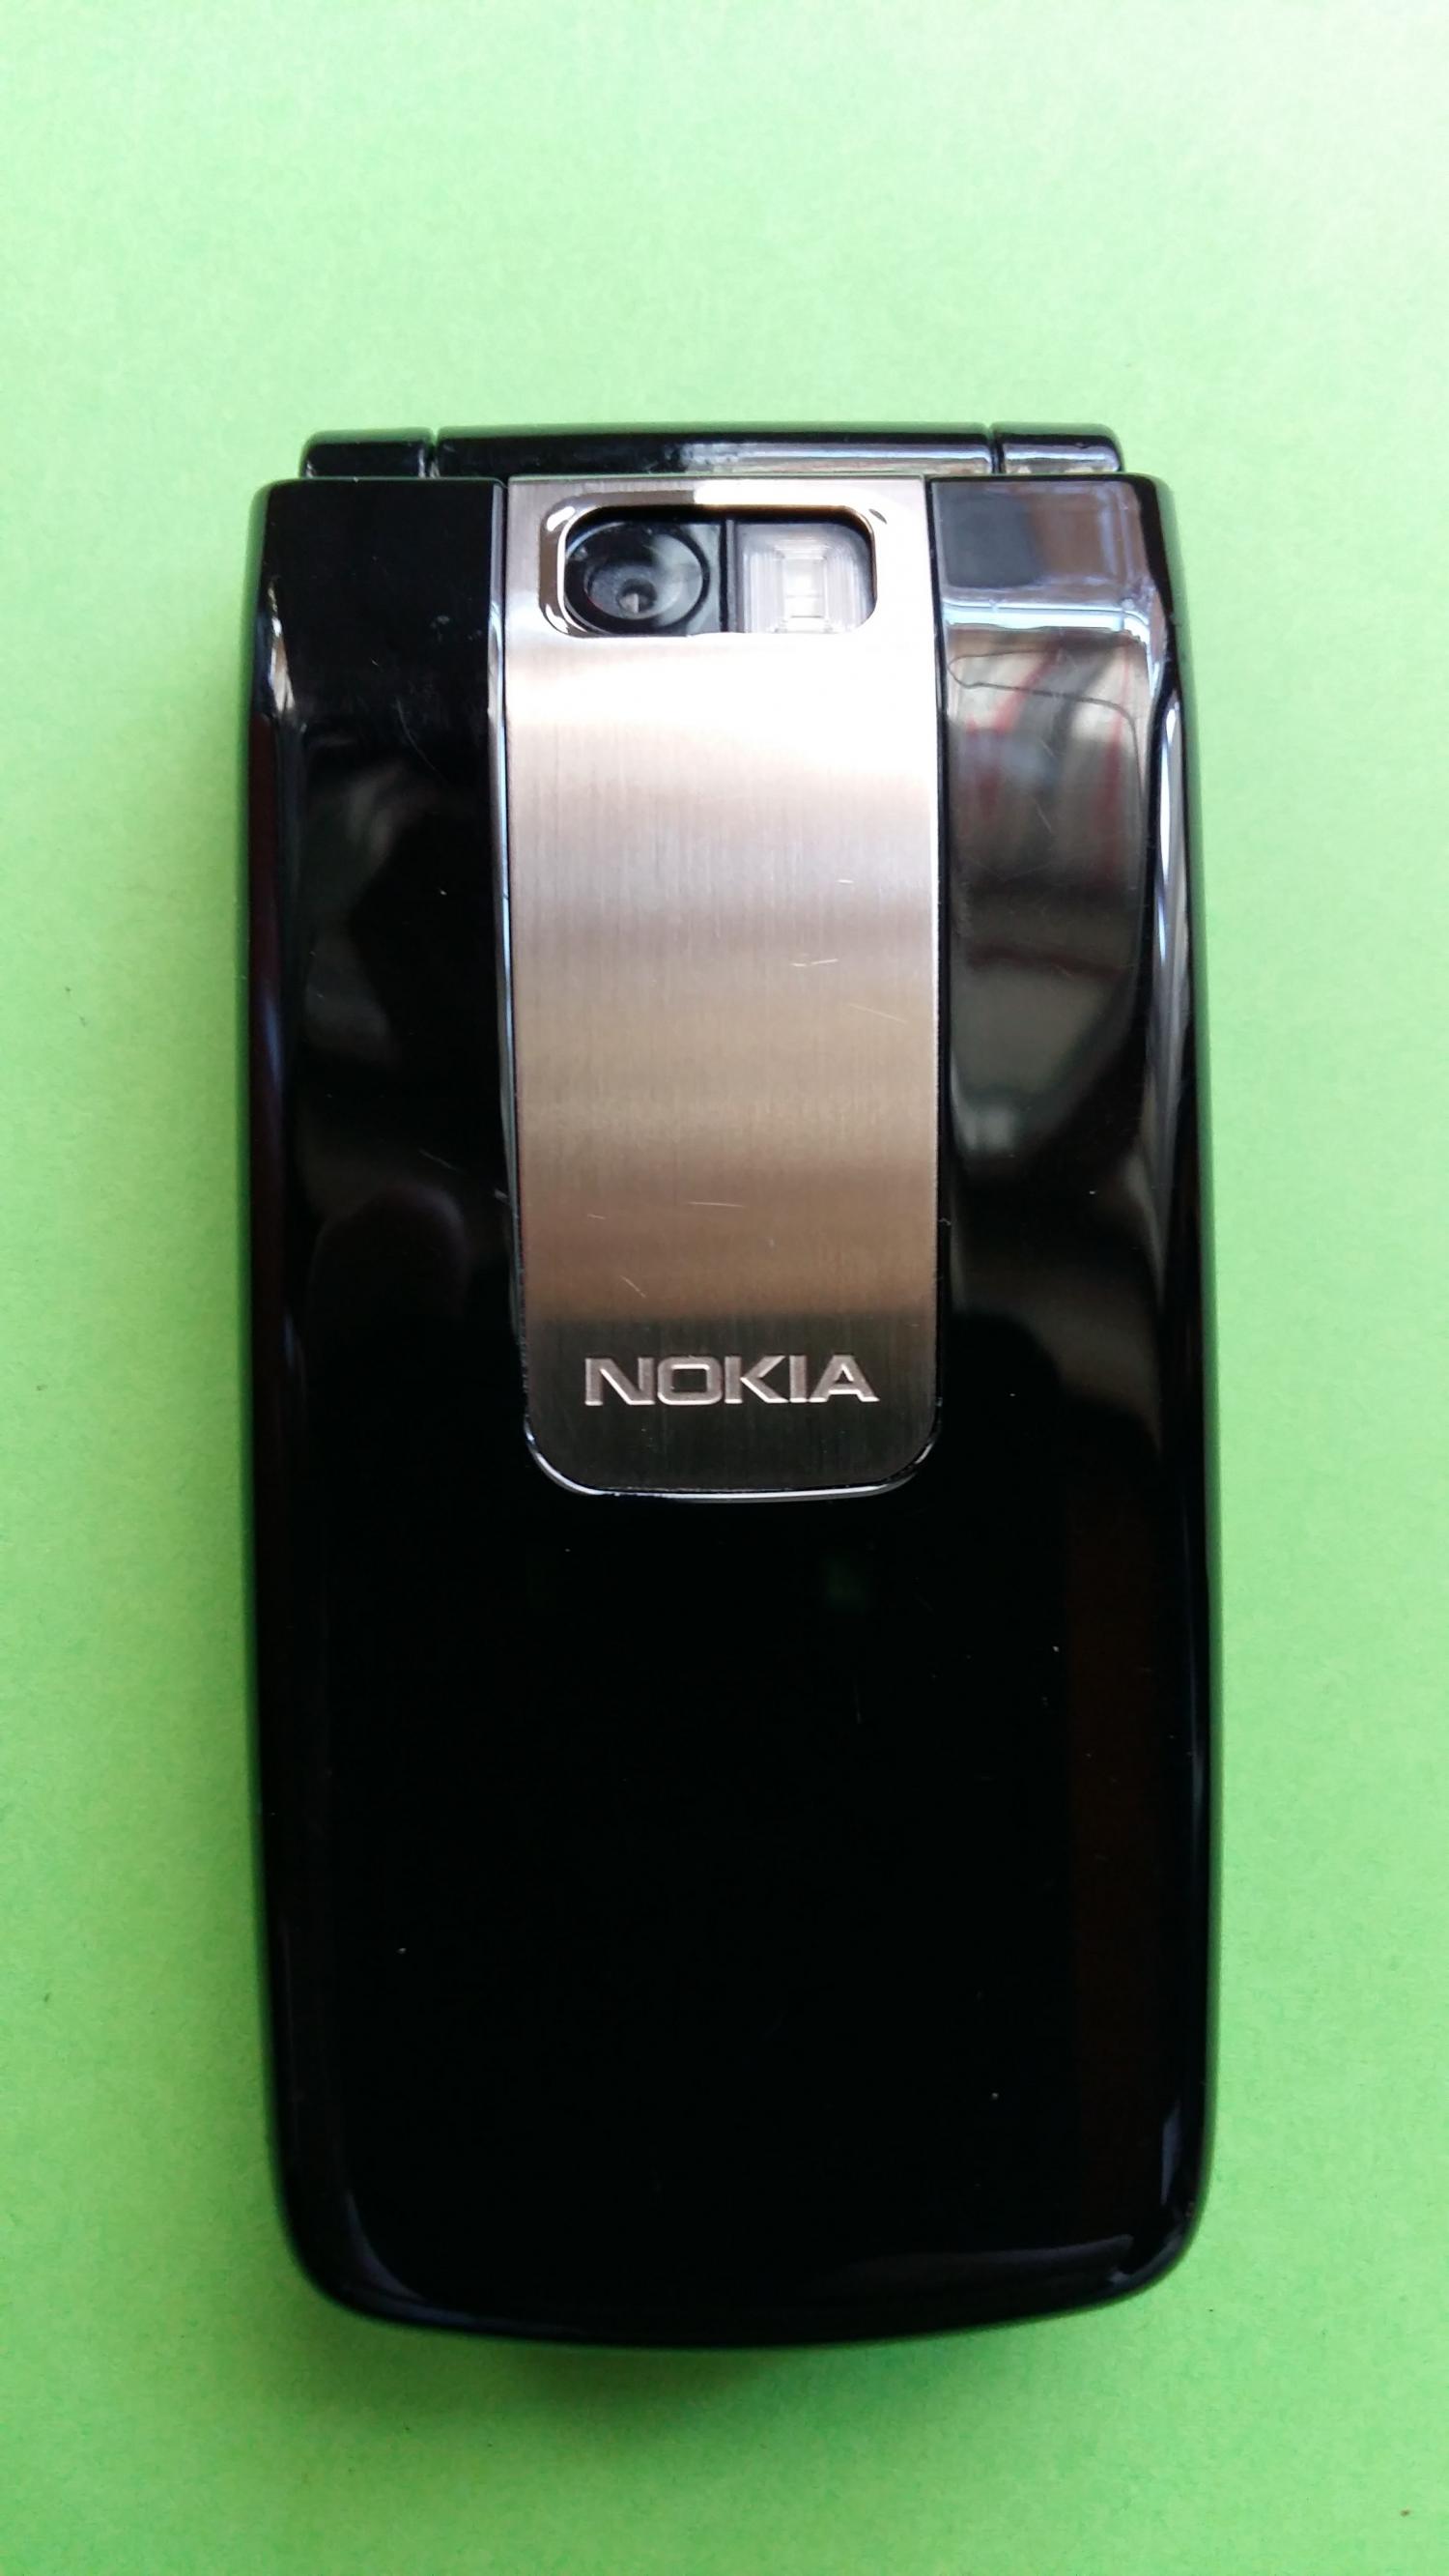 image-7331809-Nokia 6600F-1 Fold (4)5.jpg